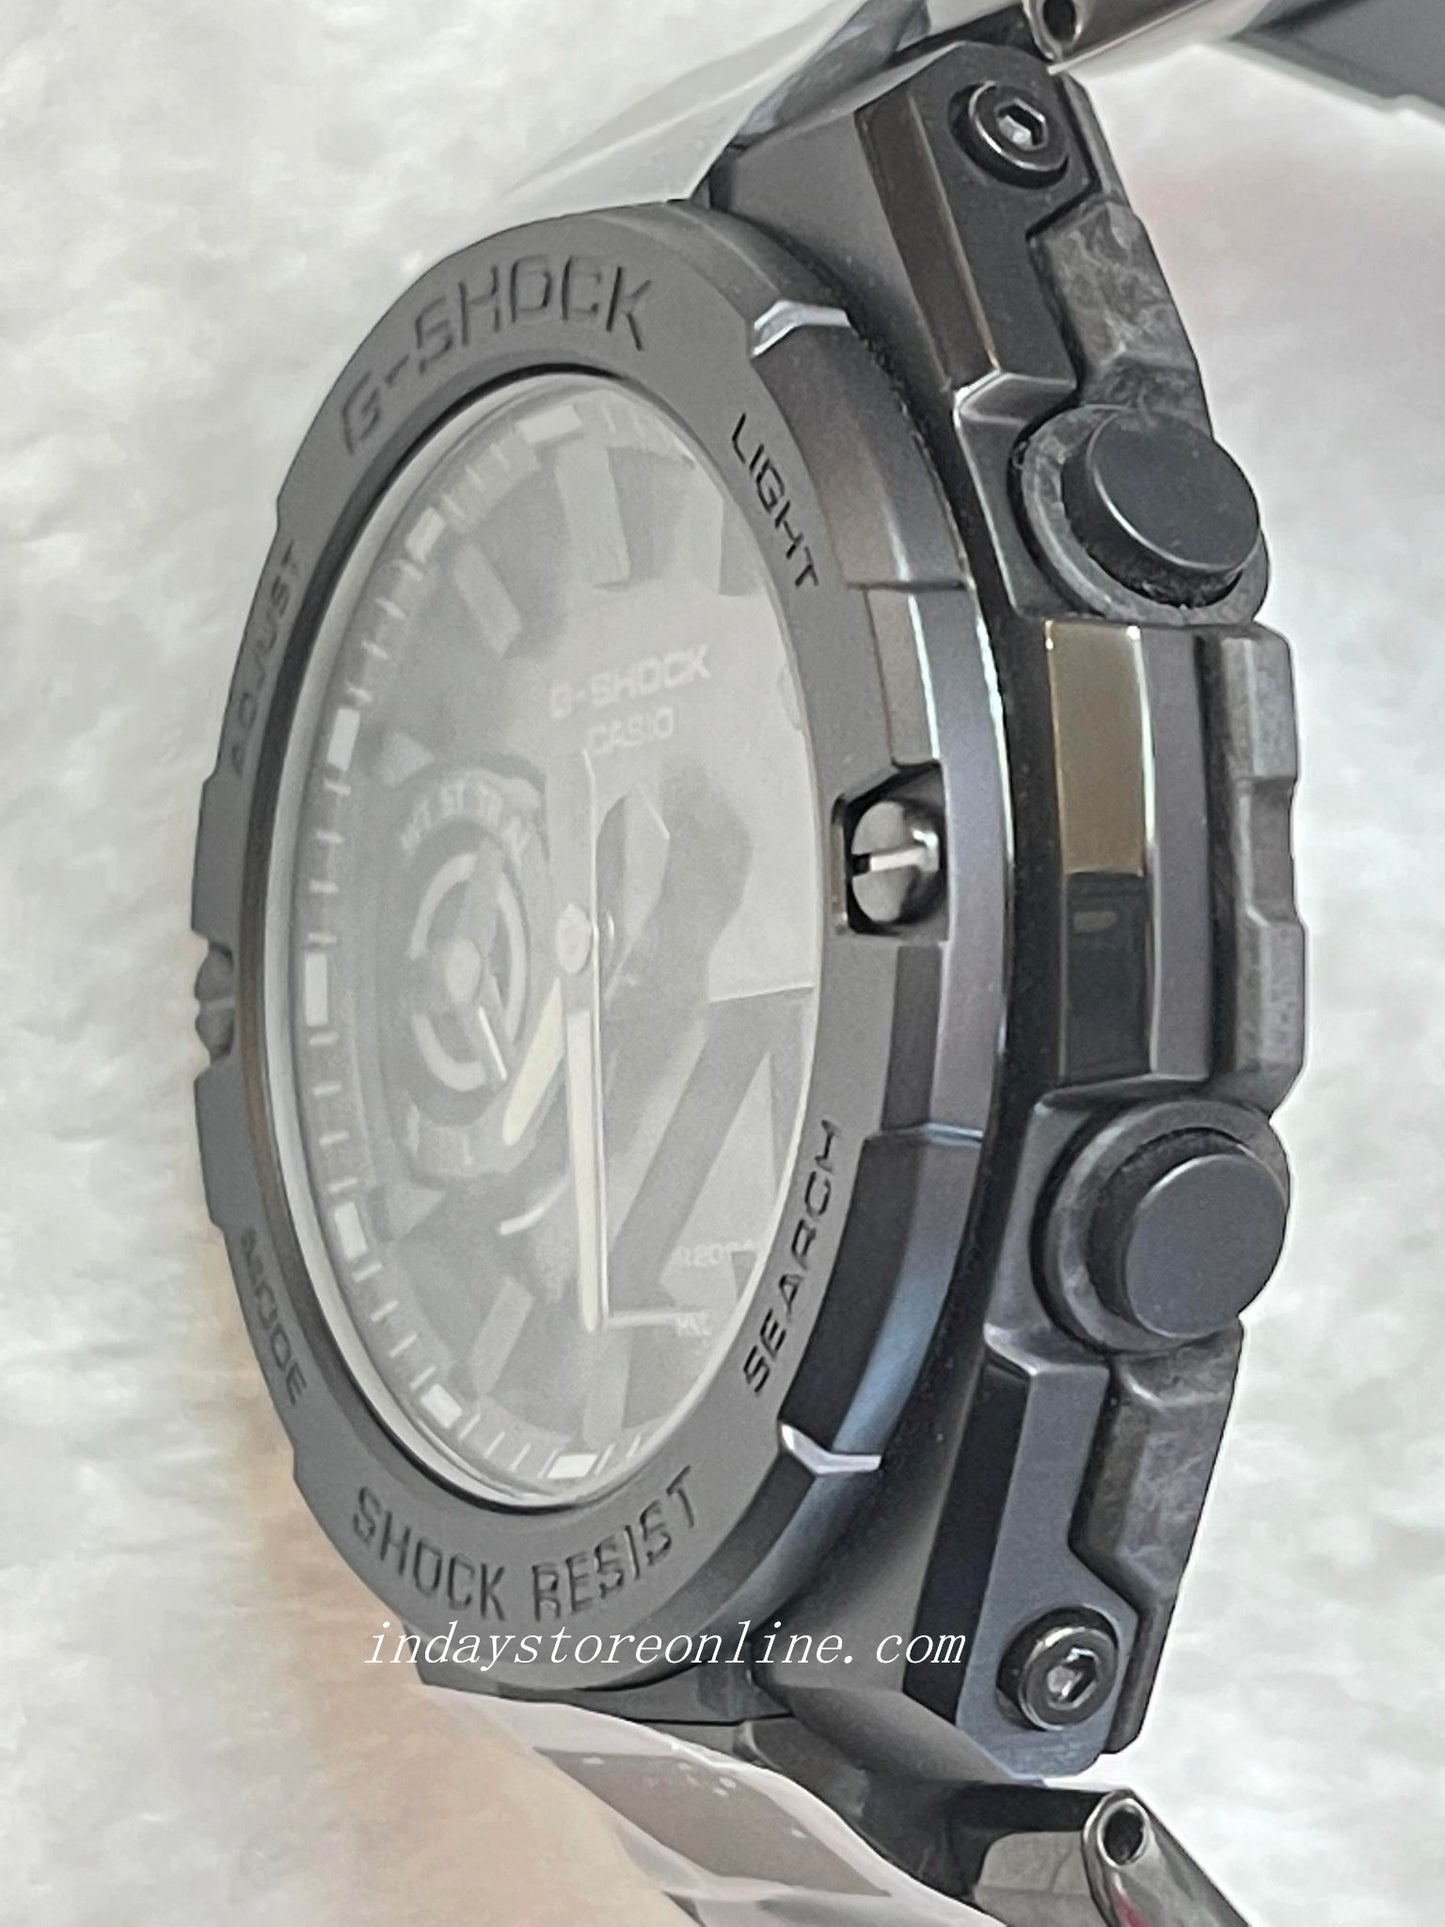 Casio G-Shock G-Steel Men's Watch GST-B500BD-1A Analog-Digital G-Steel GST-B500 Series Carbon Core Guard structureTough Solar (Solar powered)